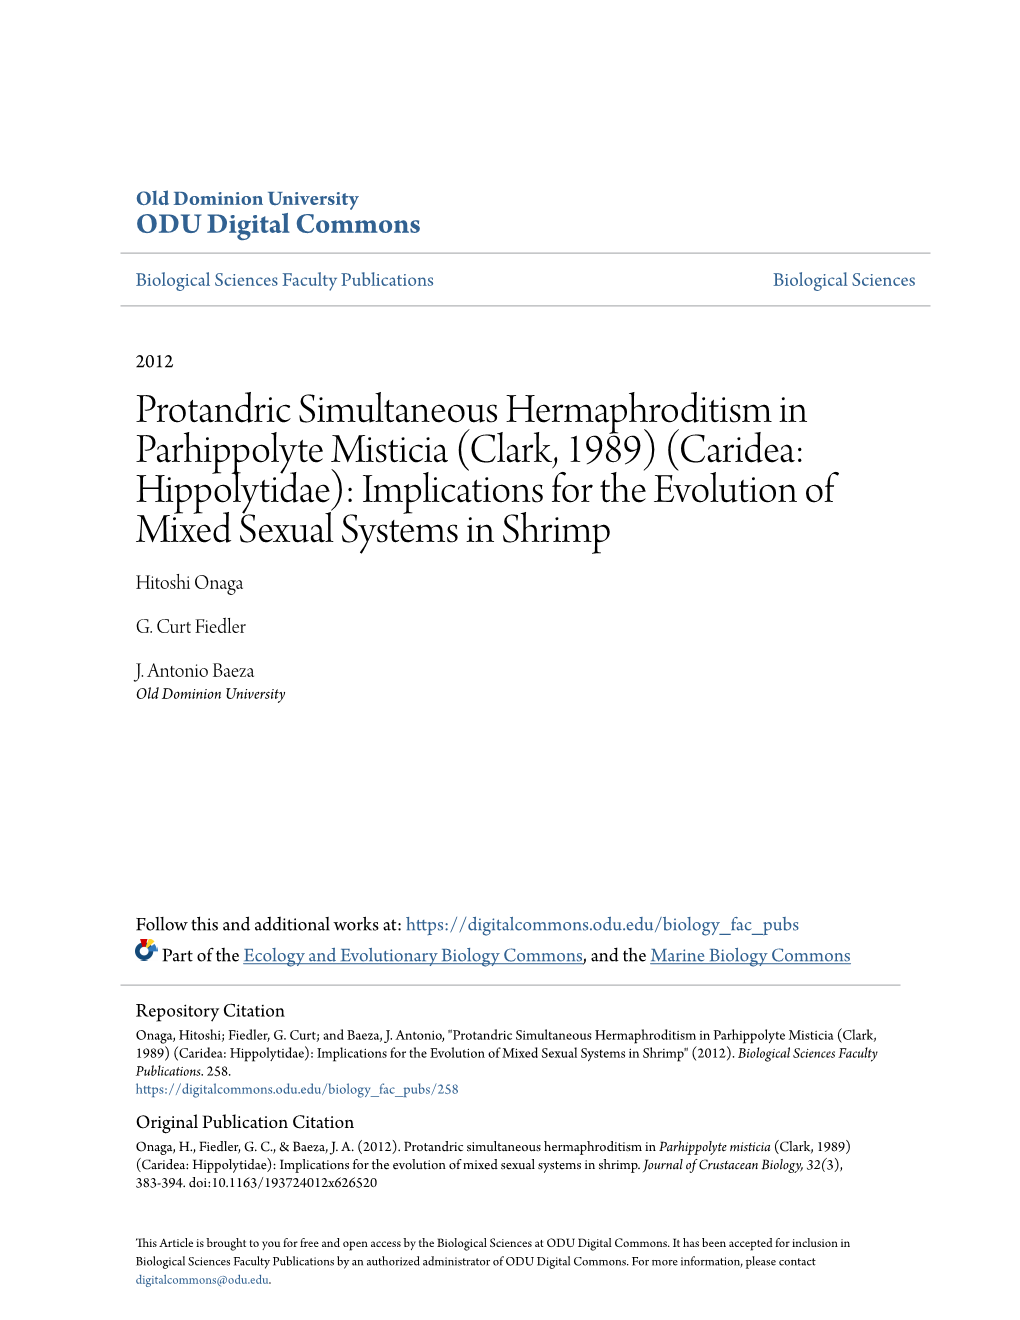 Protandric Simultaneous Hermaphroditism in Parhippolyte